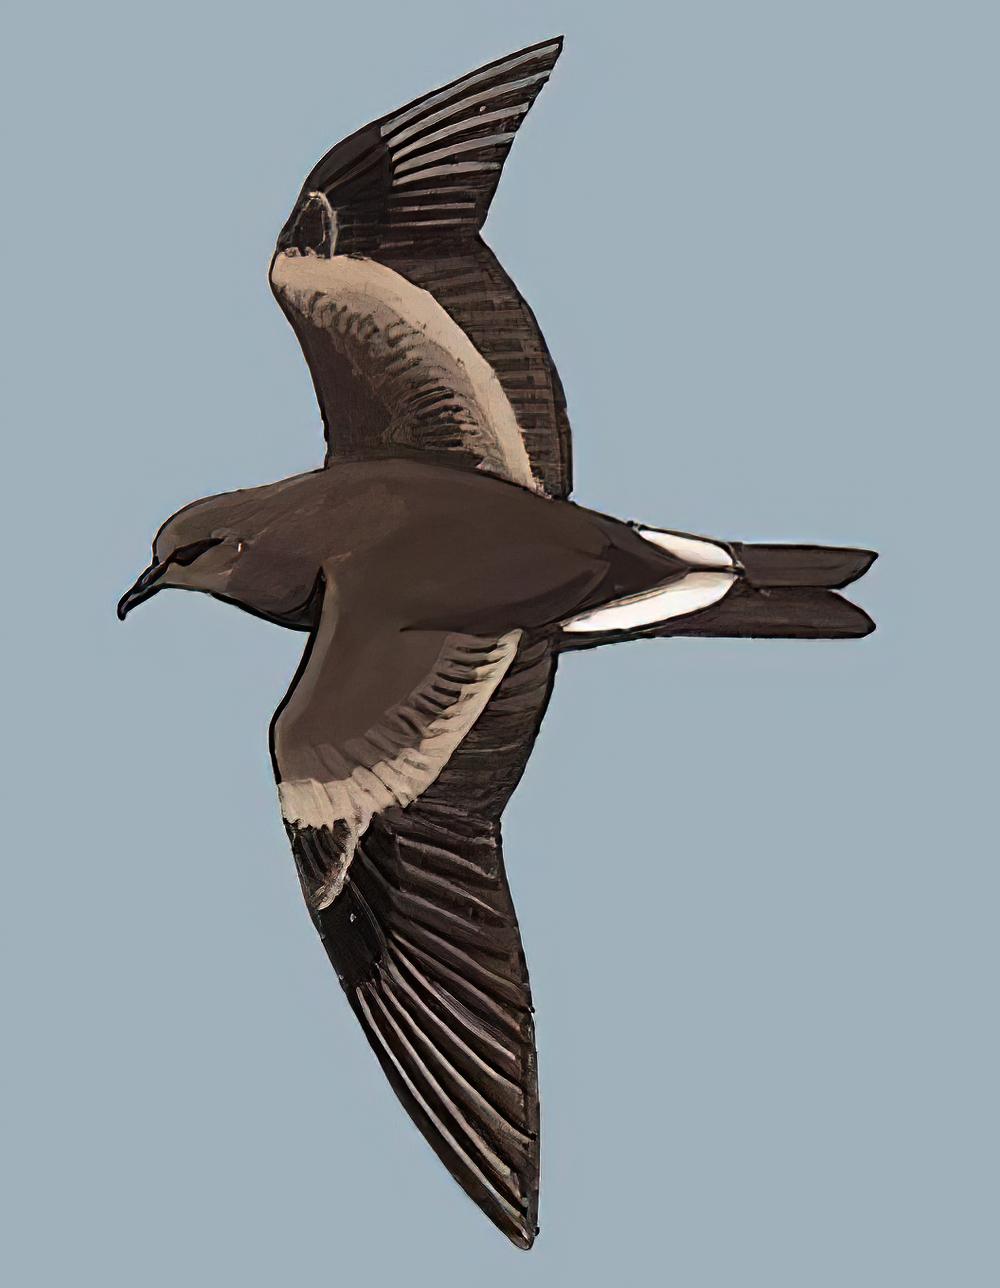 白腰叉尾海燕 / Leach\'s Storm Petrel / Oceanodroma leucorhoa